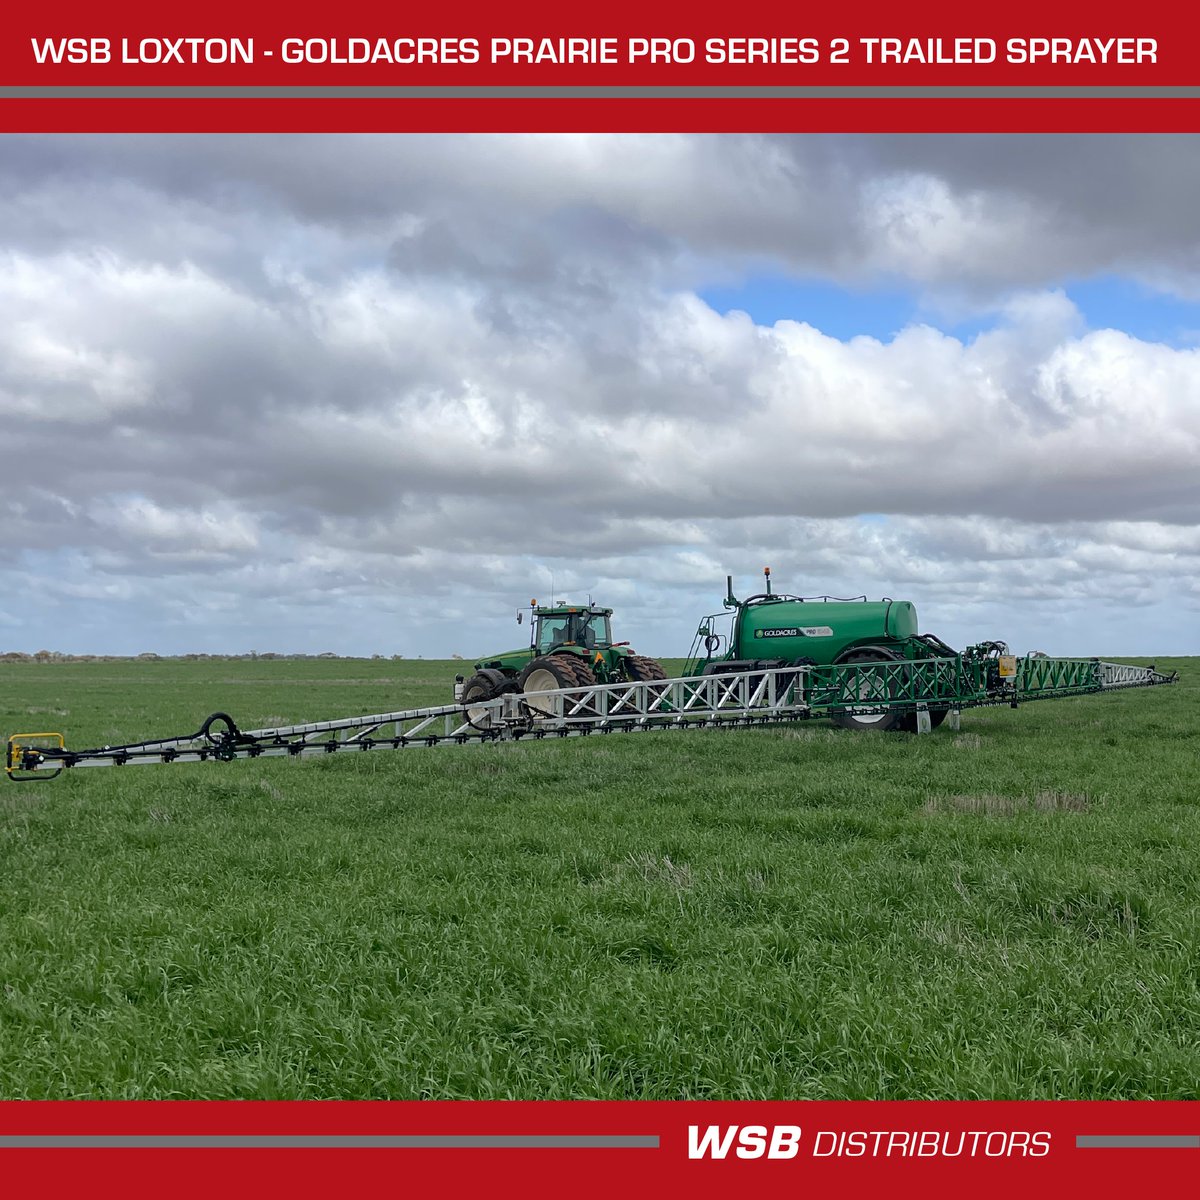 Goldacres Prairie Pro Series 2 Trailed Sprayer – 10,000L 48m Boom install for Michael Lange in Woodleigh.

#GoldAcresTrailSprayer #AdvancedSprayerTech 
#PrecisionSpraying
#EfficientAgTech #SpraySmartly #AgriculturalTech 
#OptimizedSpraying
#SmartFarmEquipment #EfficientCropCare